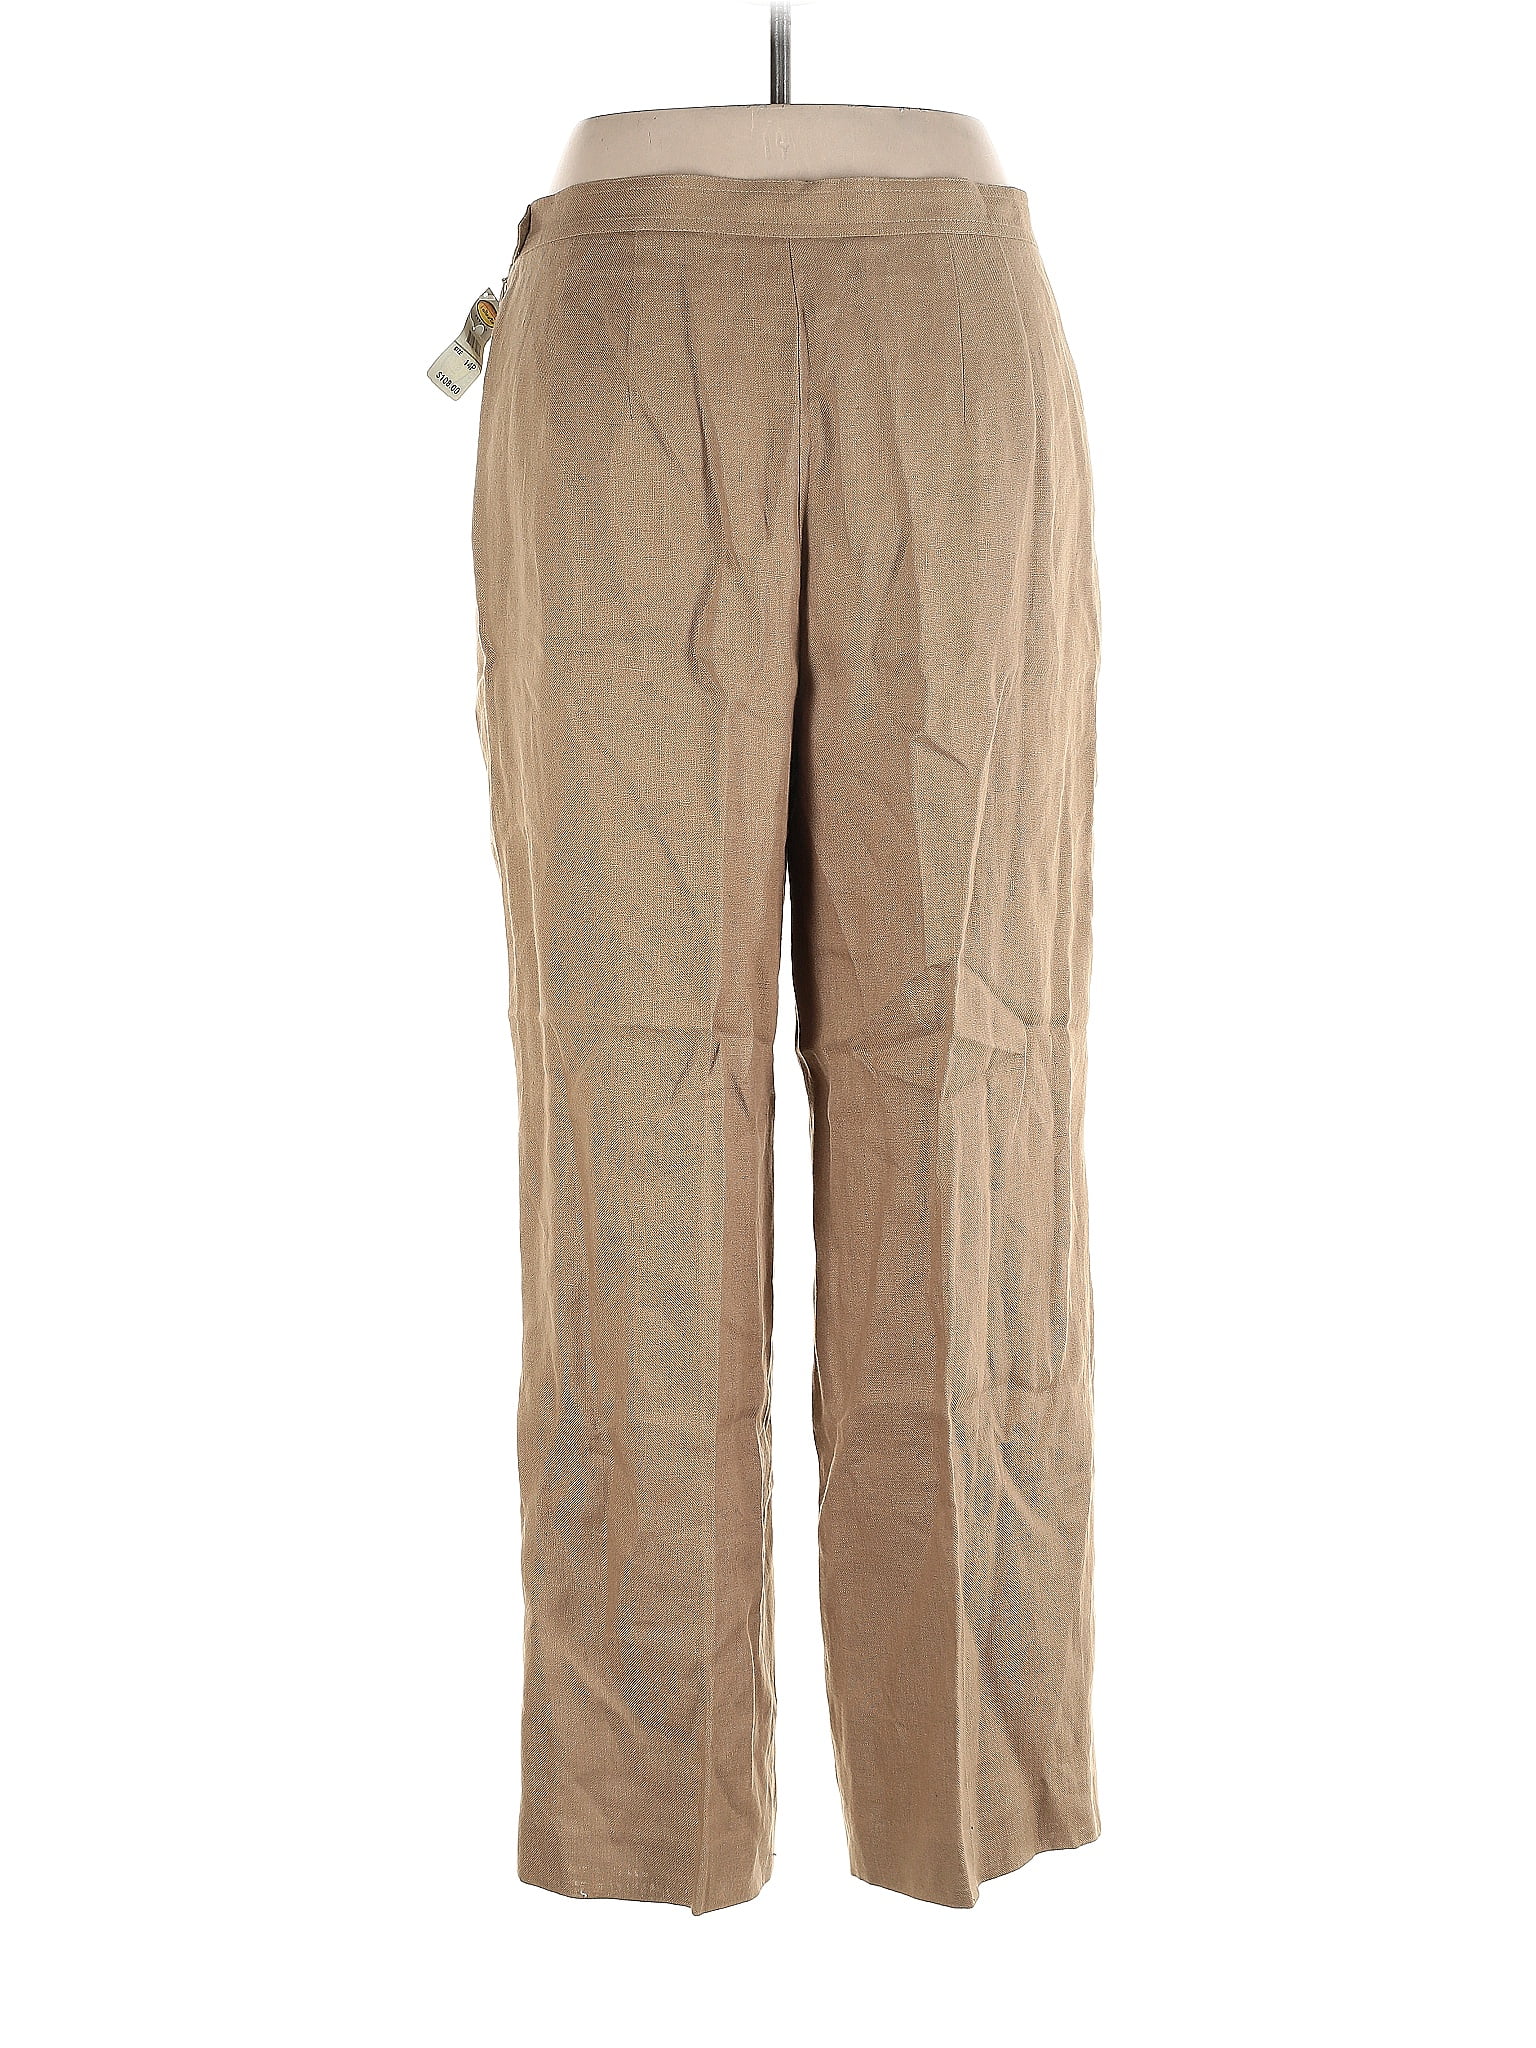 Talbots 100% Linen Brown Tan Casual Pants Size 14 (Petite) - 75